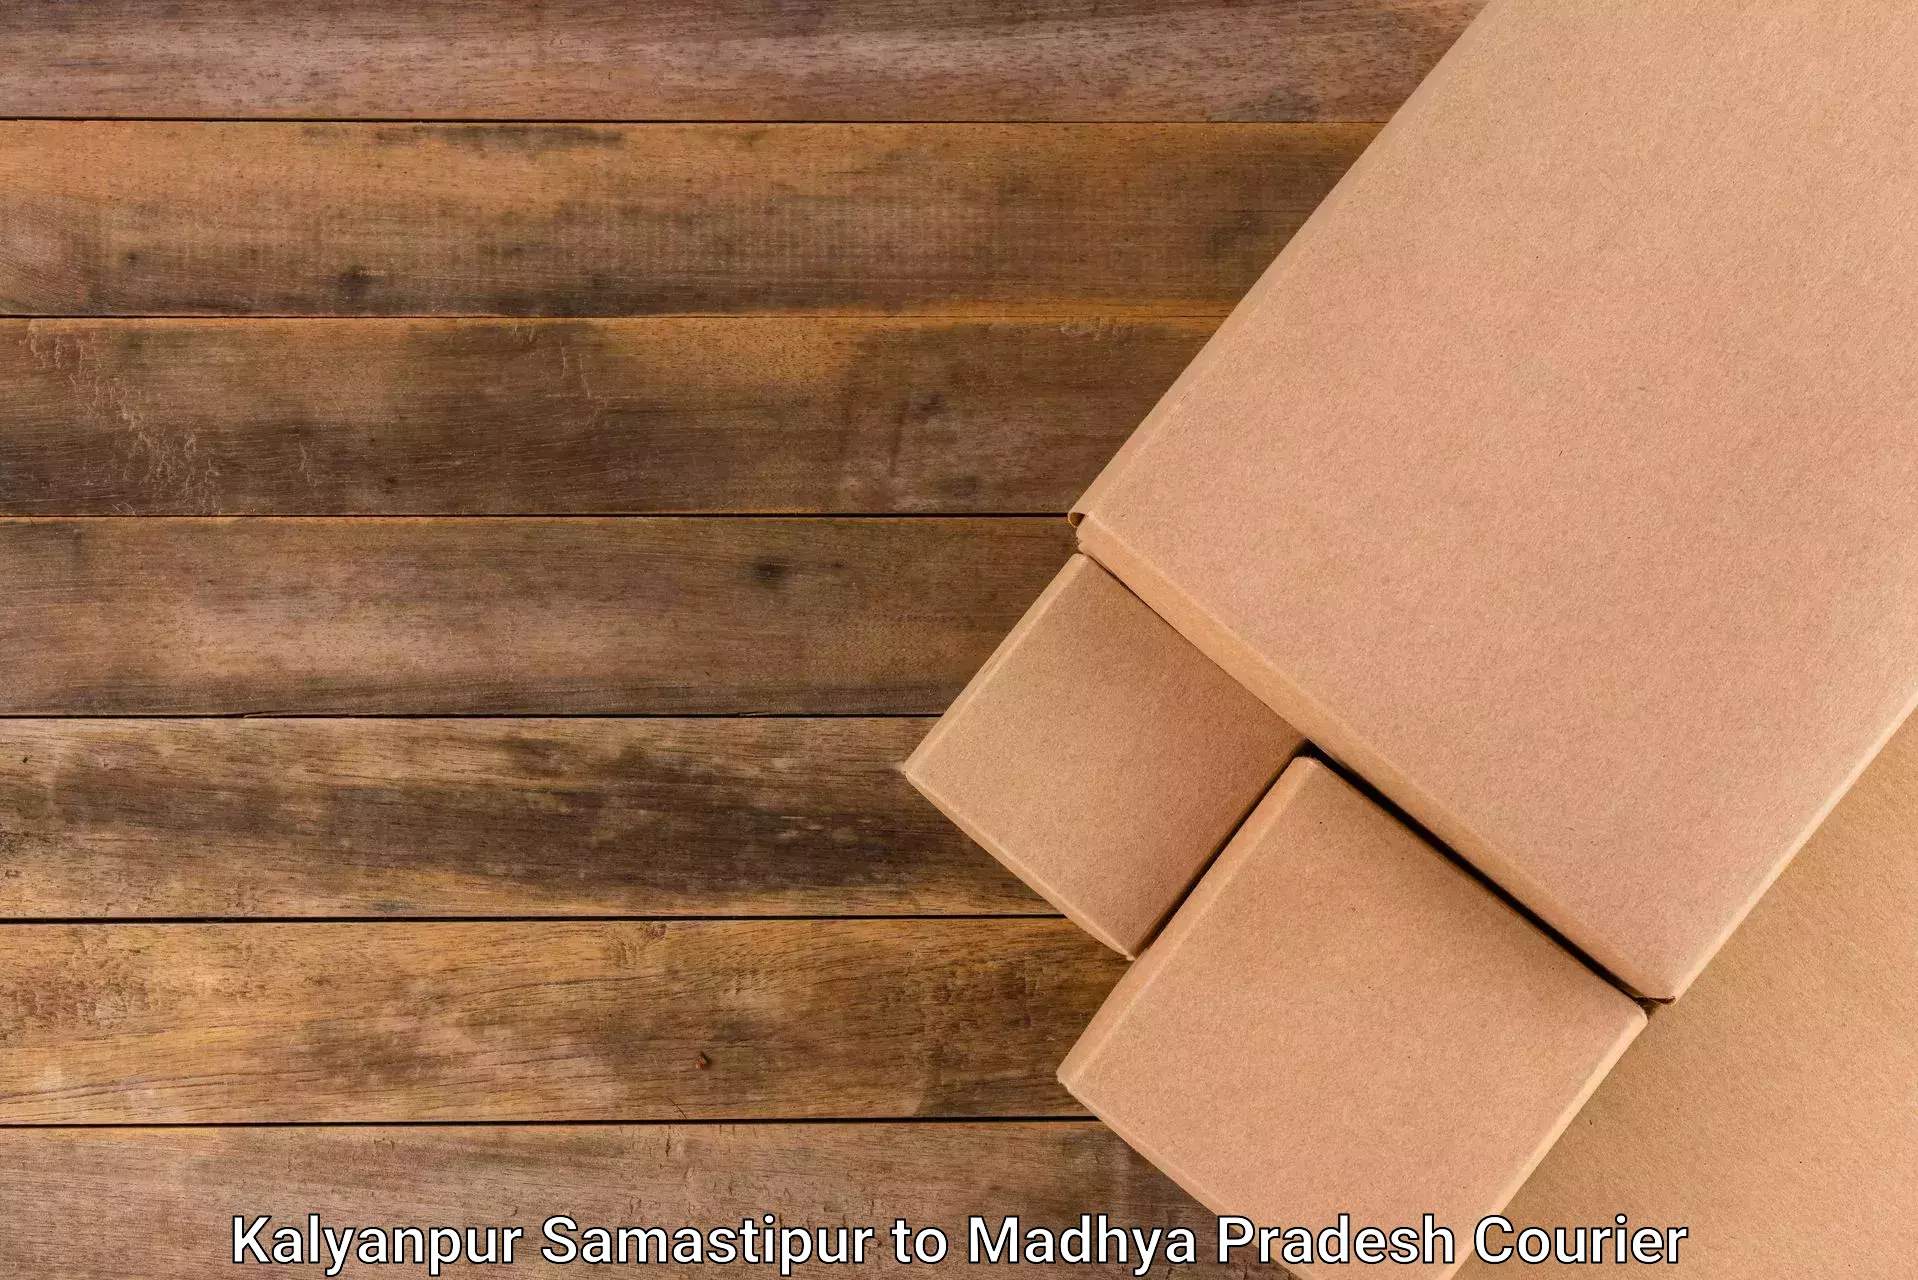 Express delivery capabilities Kalyanpur Samastipur to Madhya Pradesh